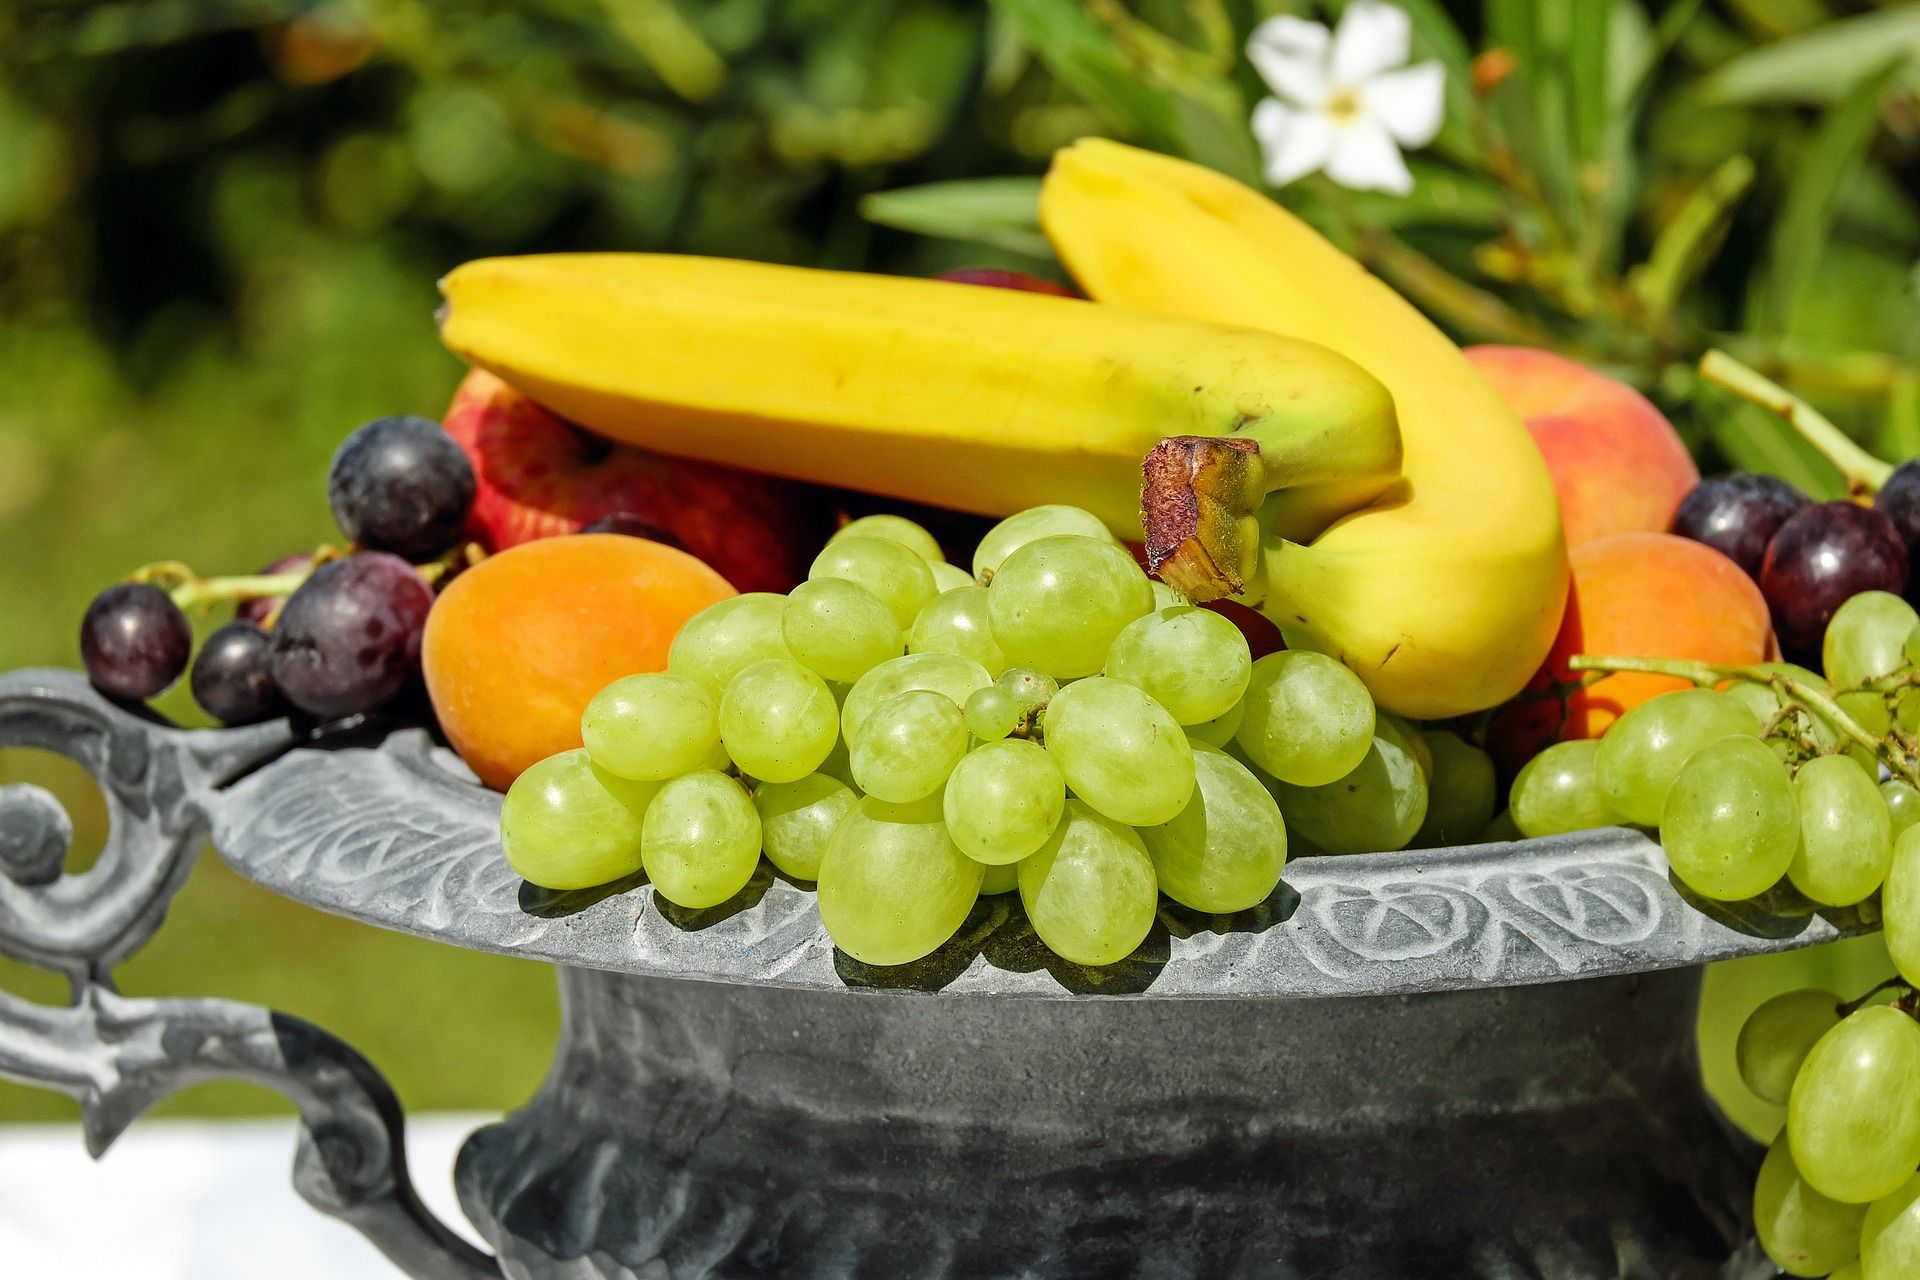 Dalam yang enzim mengatasi pepaya enzim buah disebut membantu sembelit √ Tanaman